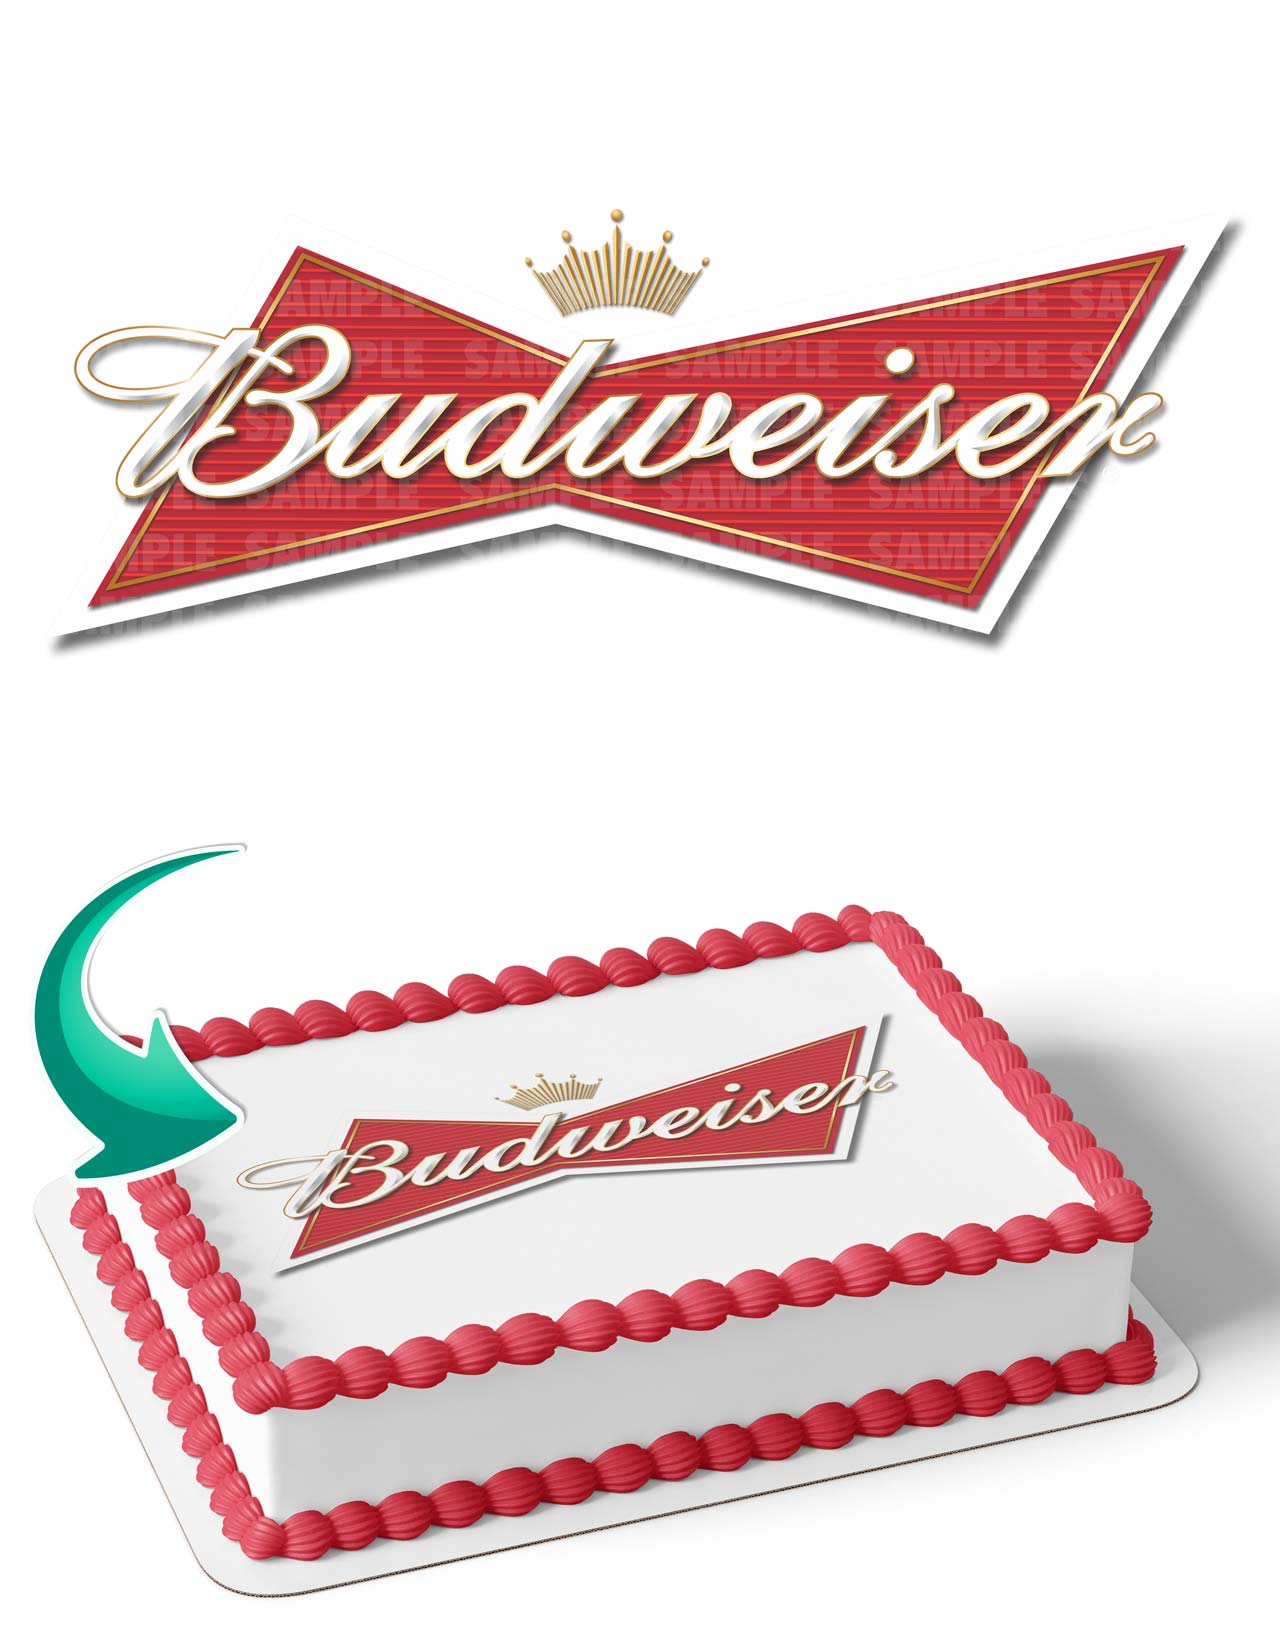 60th Birthday Beer Cake | Birthday beer cake, Beer birthday, Beer cake